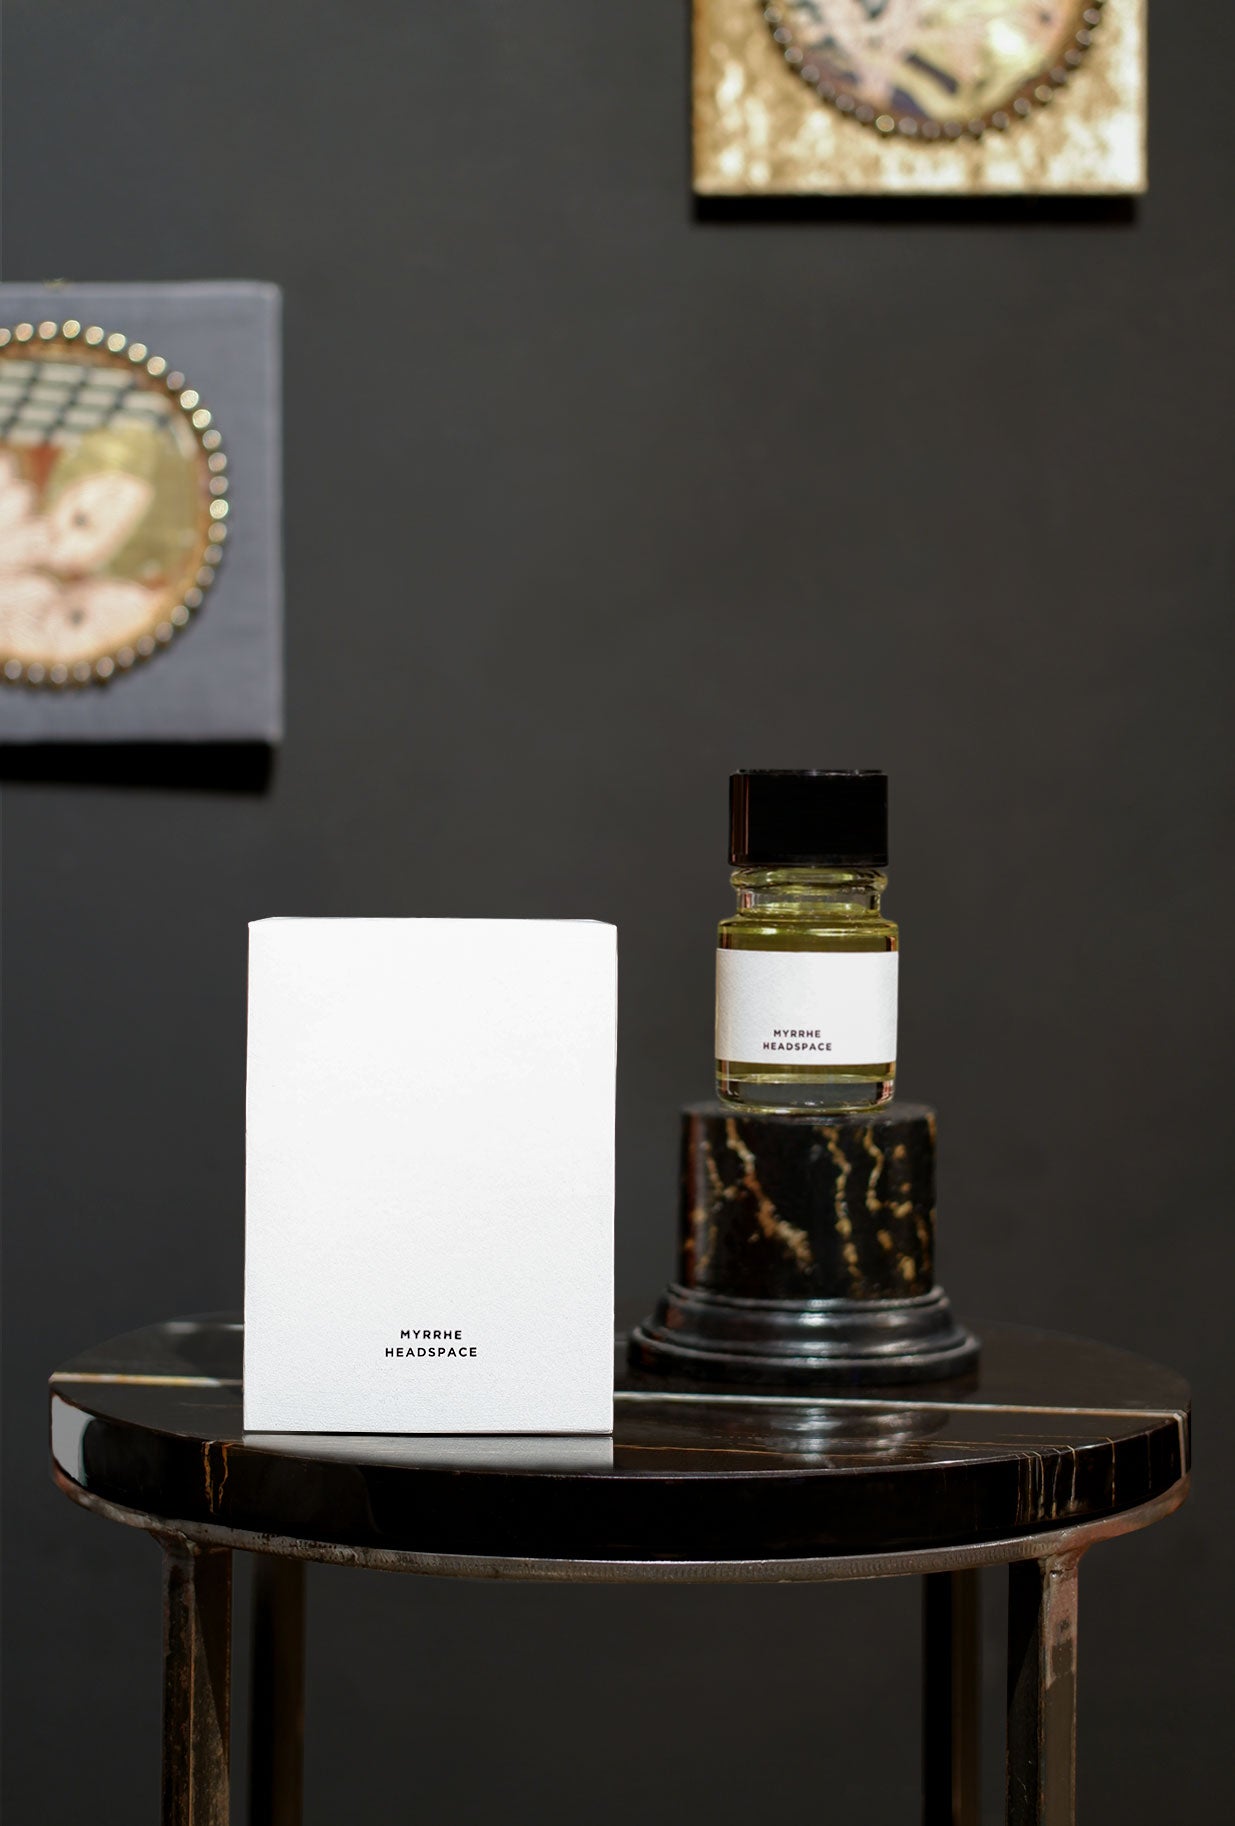 Myrrhe by Headspace parfum 100ml dalle note sofisticate ed orientali